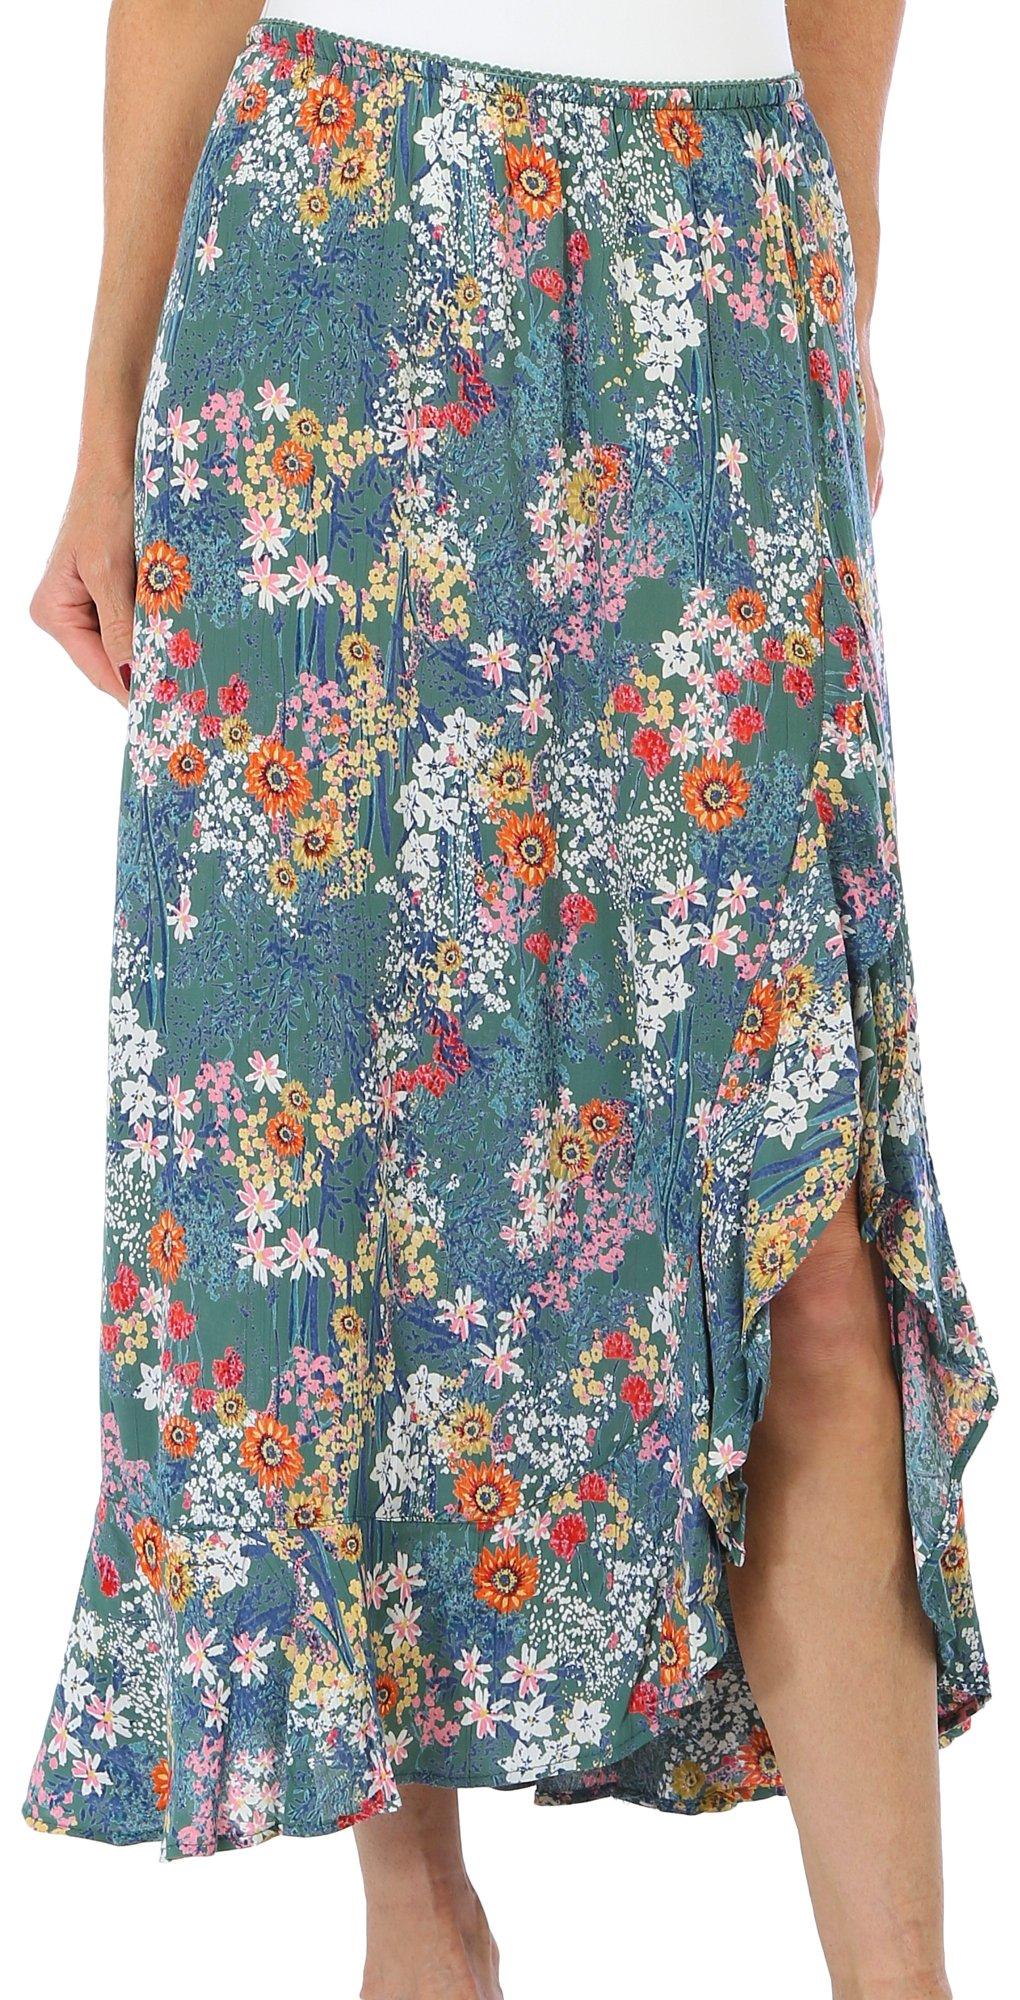 BUNULU Womens Floral Print Split Ruffle Skirt